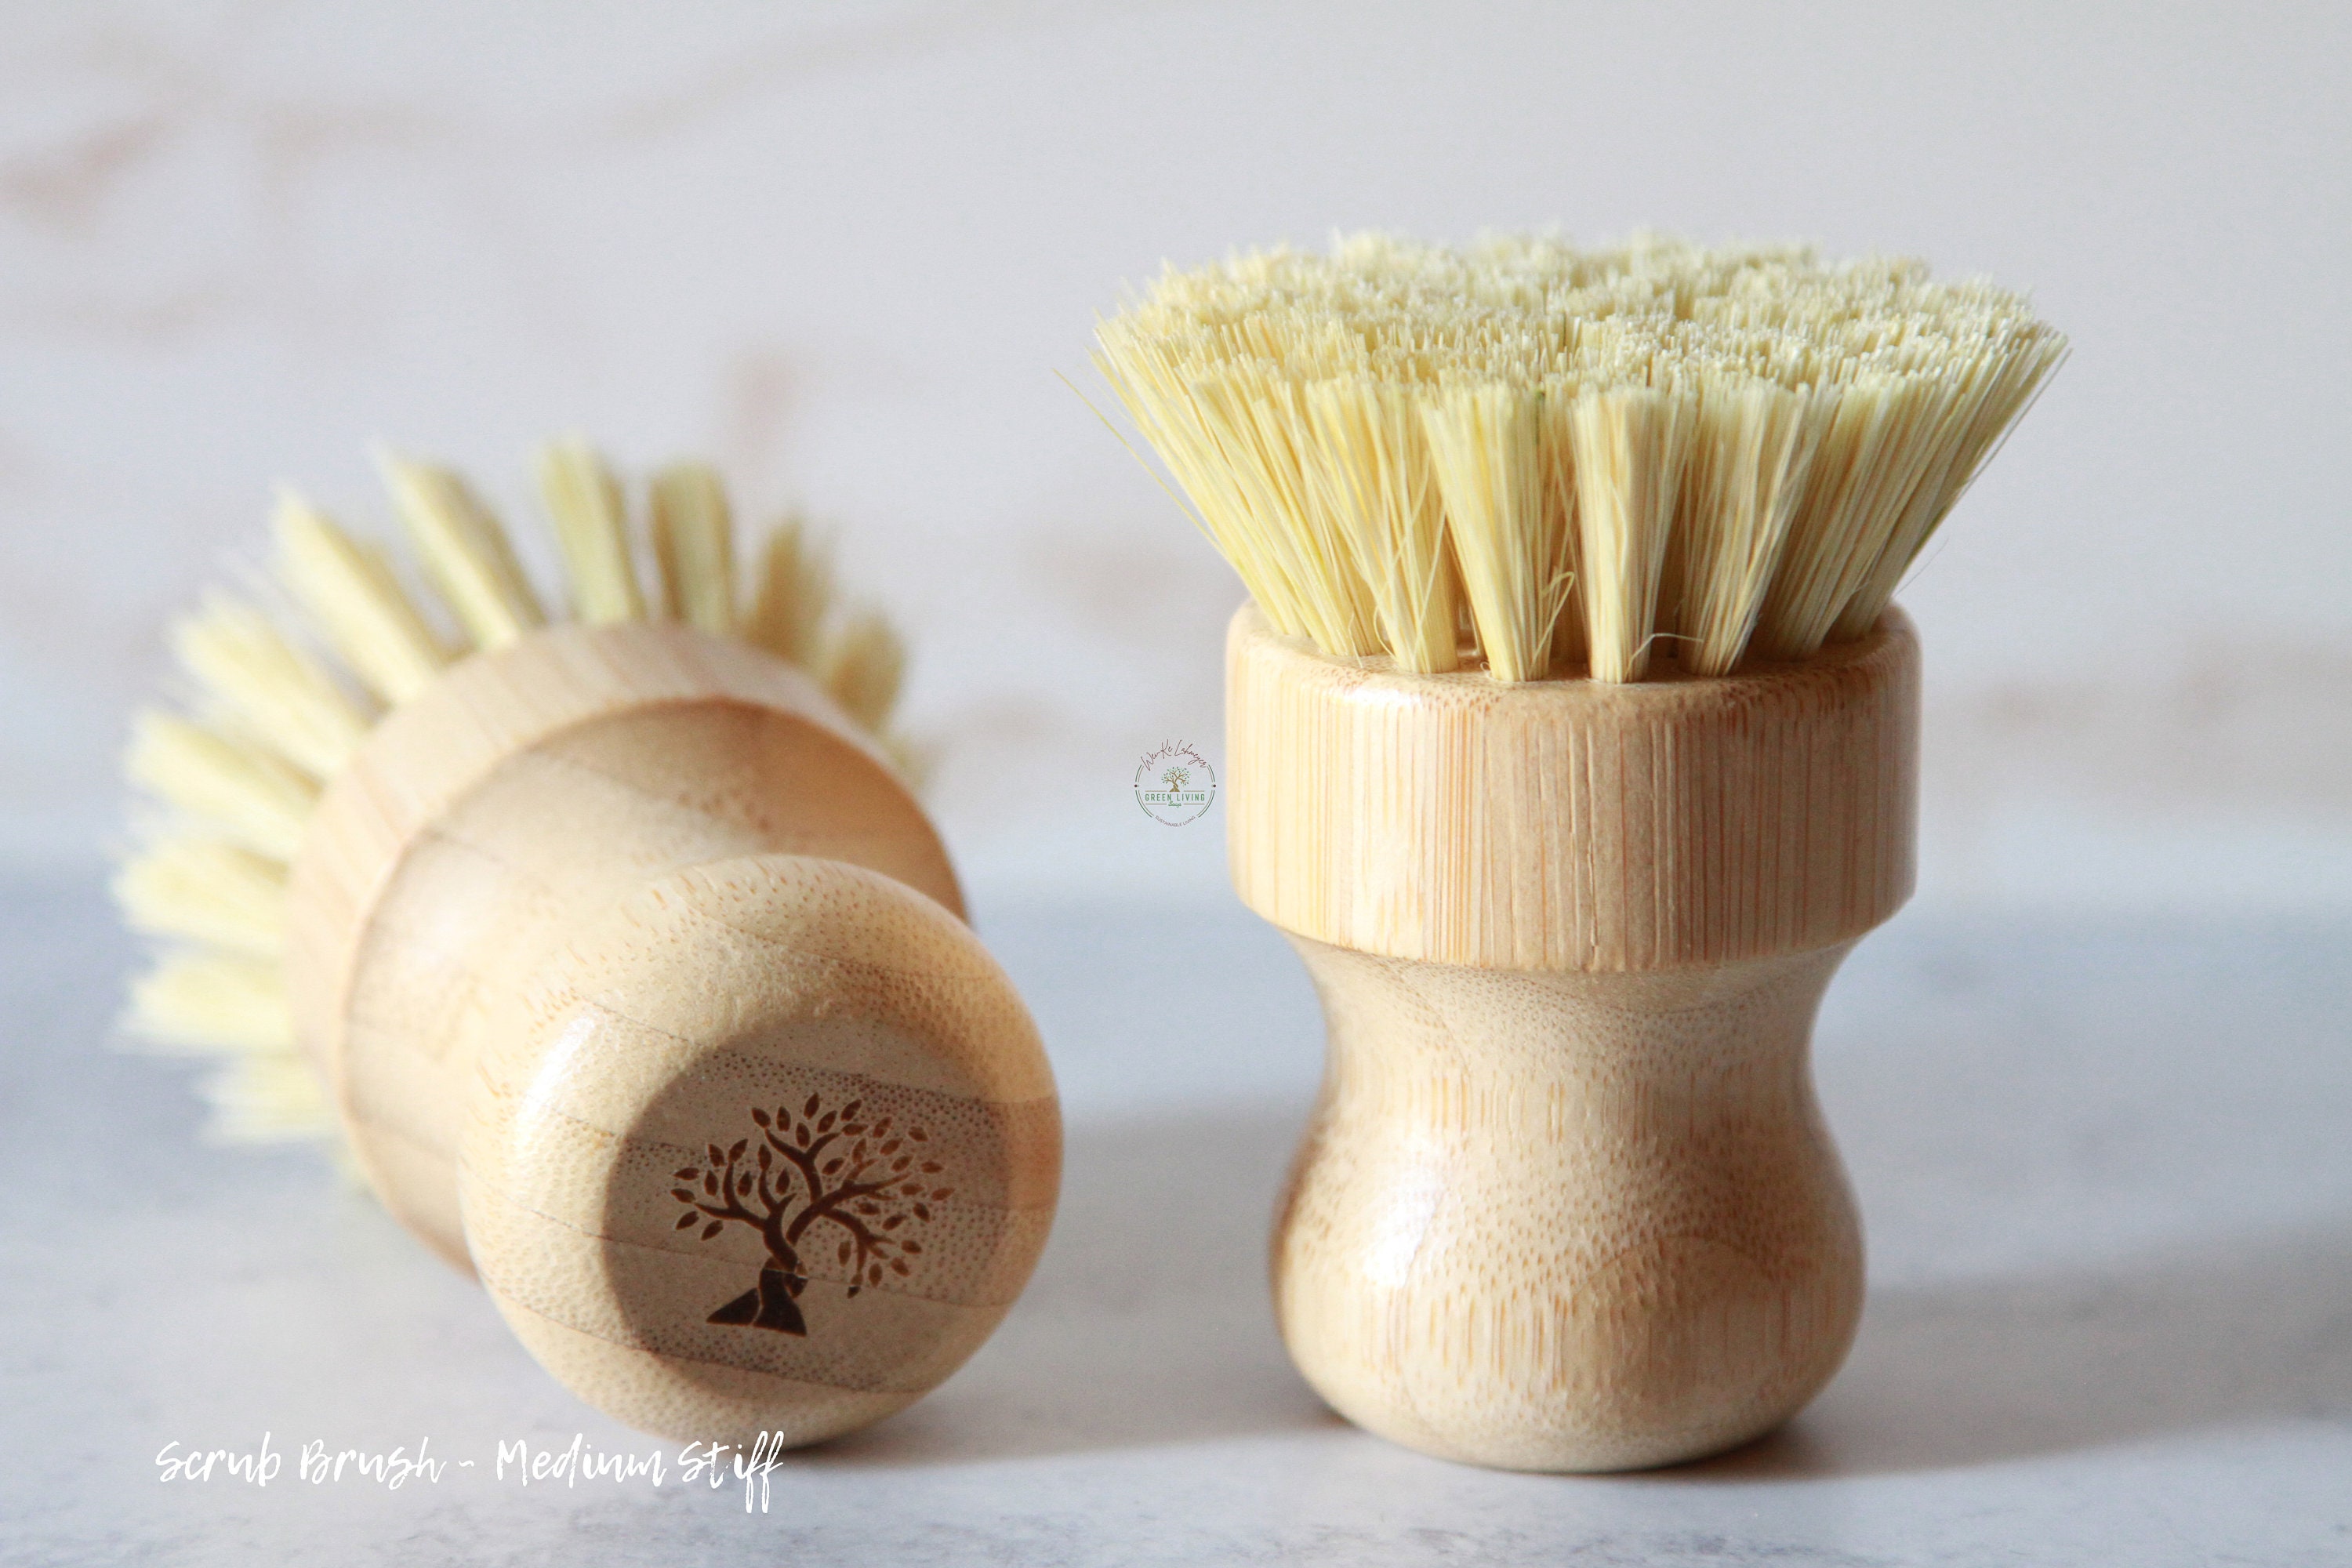 HOMCDALY Bamboo Dish Brush with Holder, Black Ceramic Dish Brush Holder, Kitchen Brushes for Dishes, Dish Scrub Brush, Kitchen Dish Brush and Holder